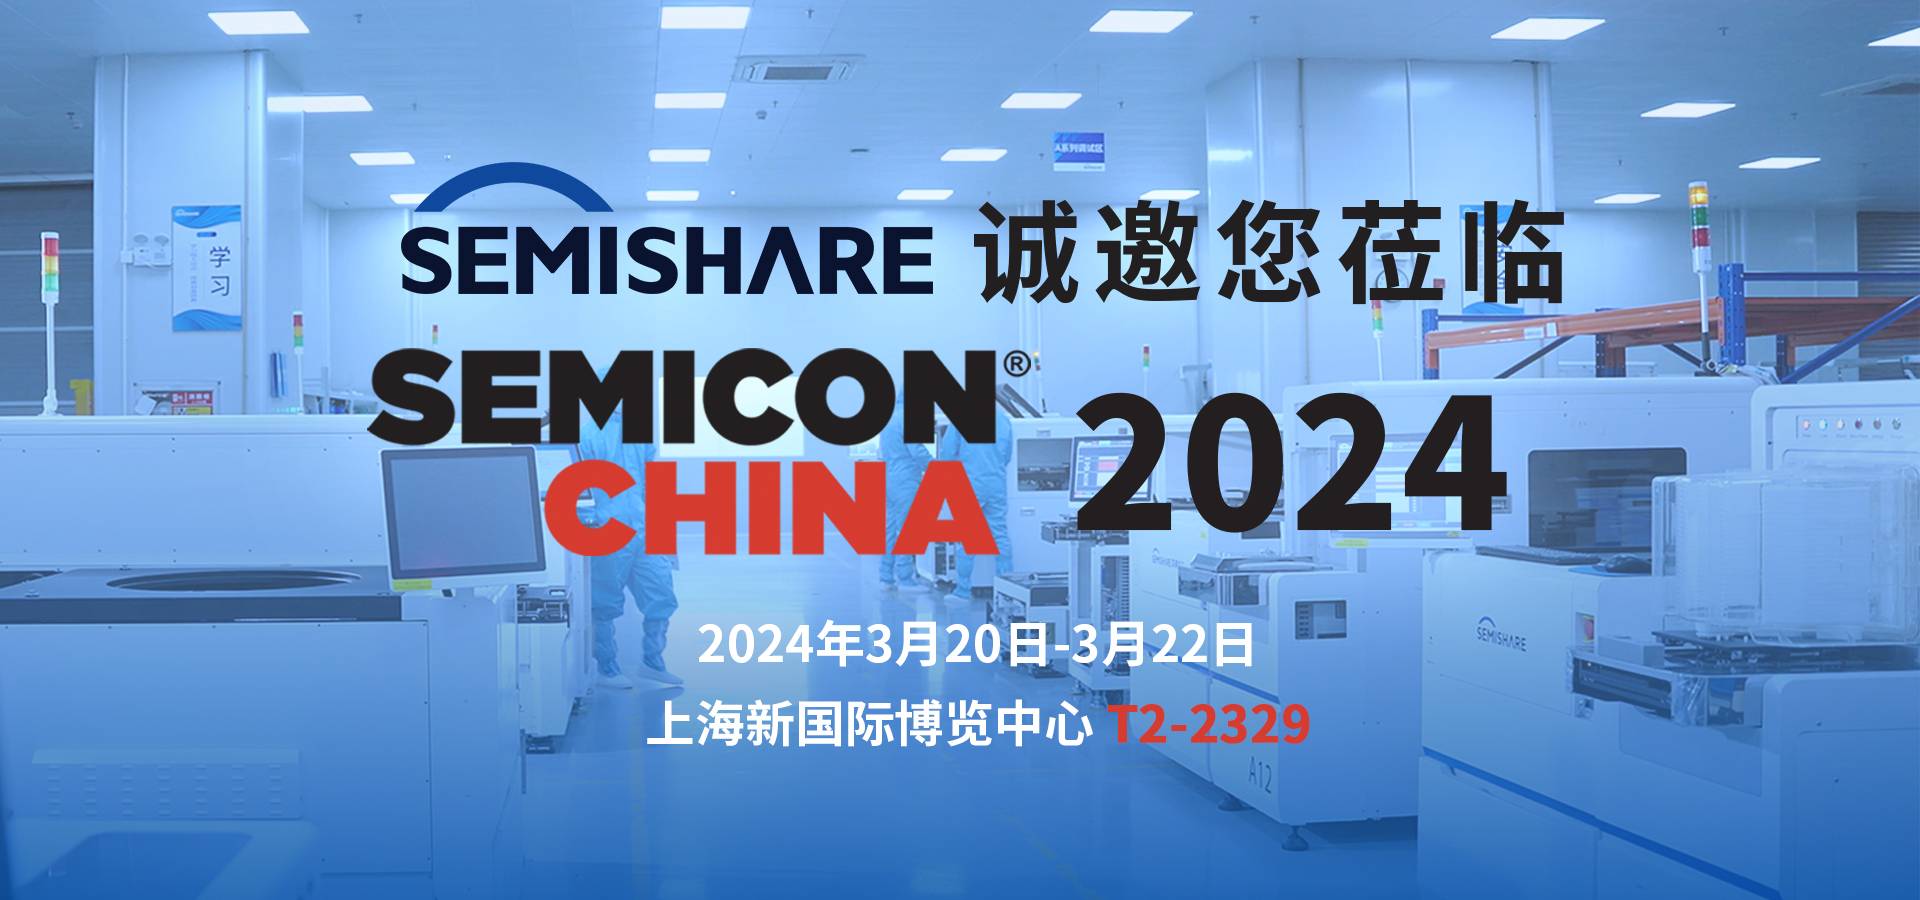 SEMISHARE诚邀您莅临SEMICON CHINA 2024，共同探讨前沿晶圆测试解决方案！